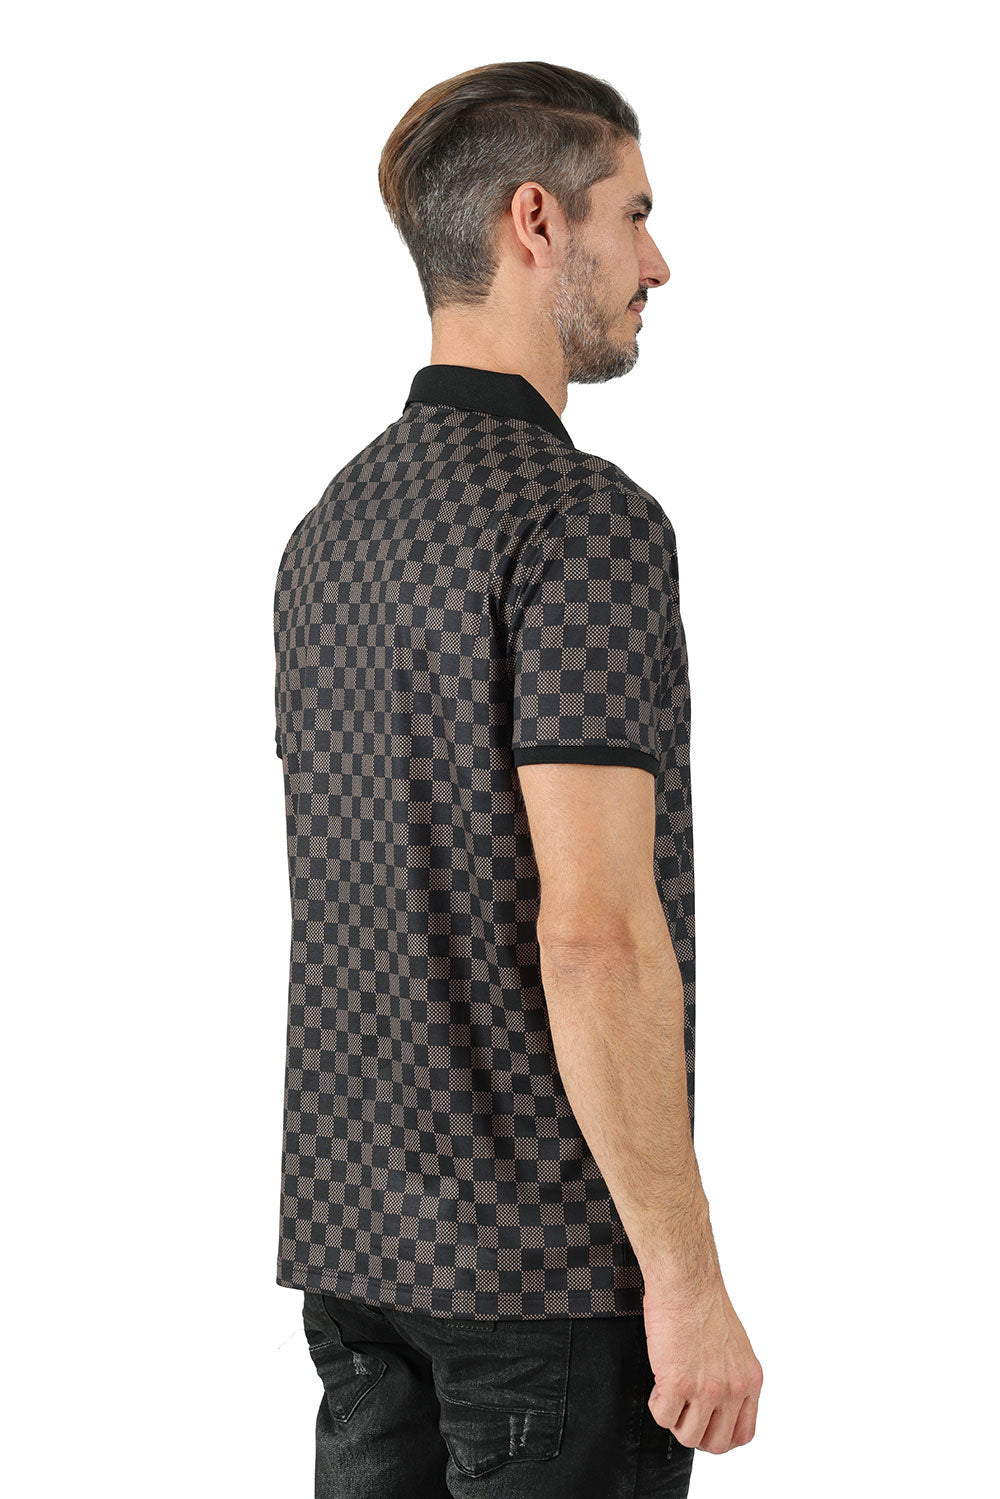 Vassari men's checkered plaid printed short-sleeve polo shirt PSV124 Coffee